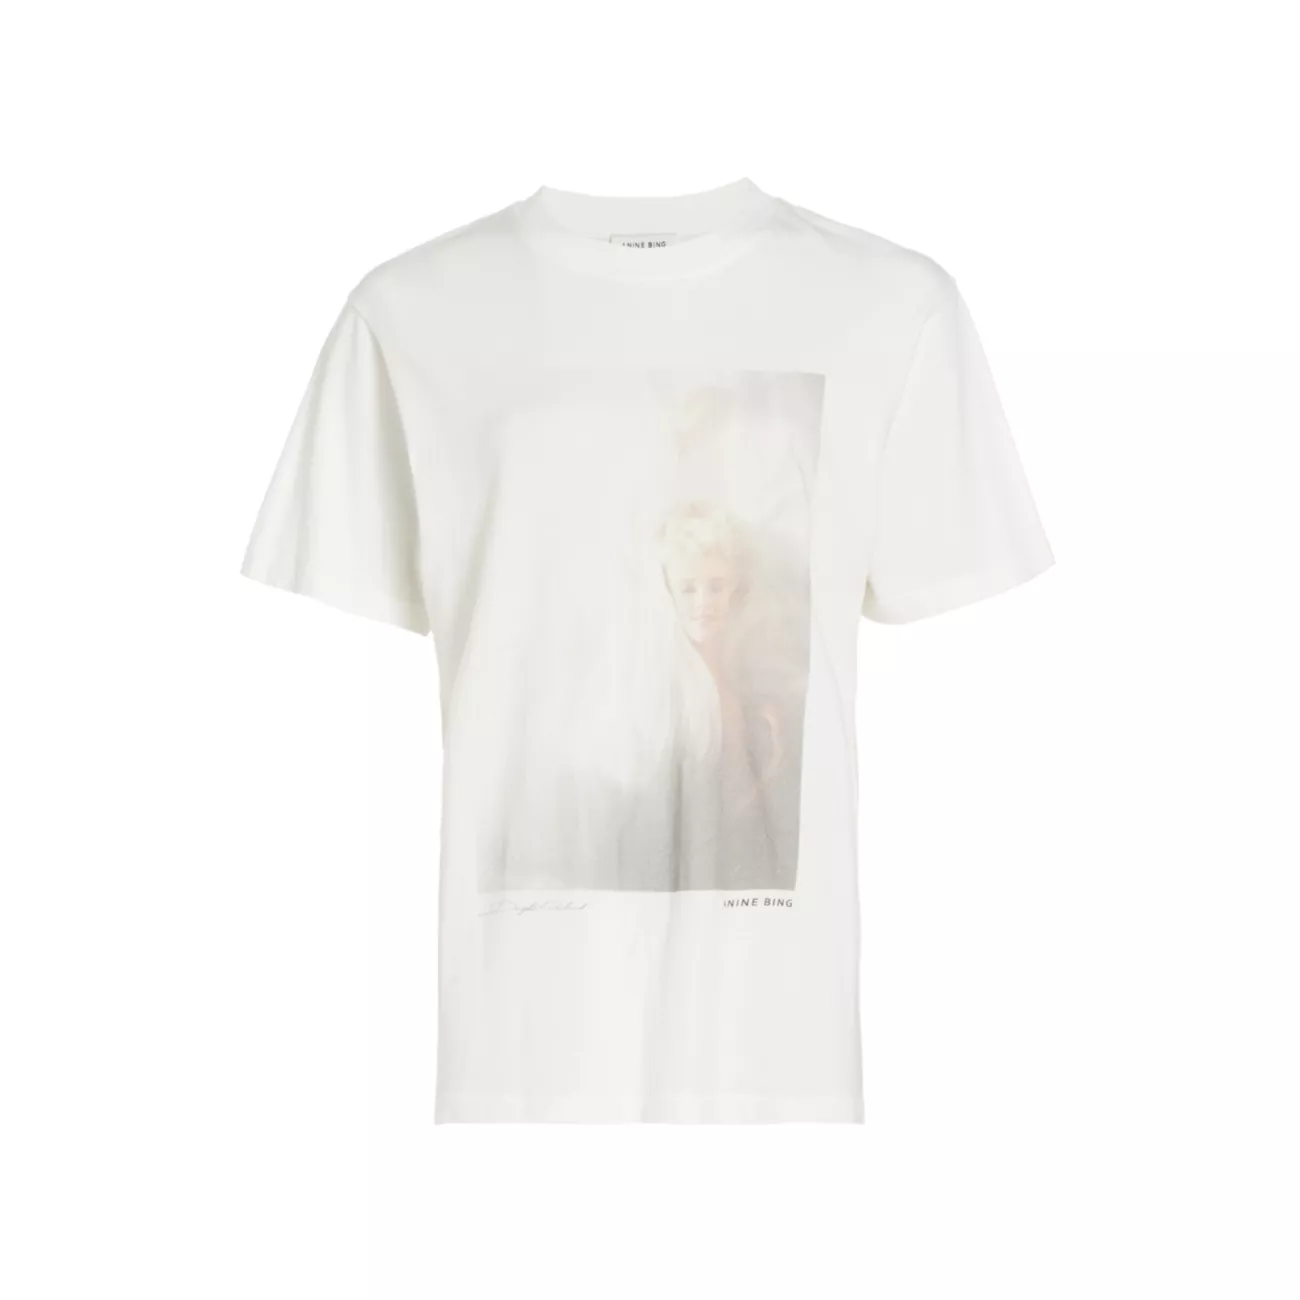 Lili Cotton Graphic T-Shirt ANINE BING